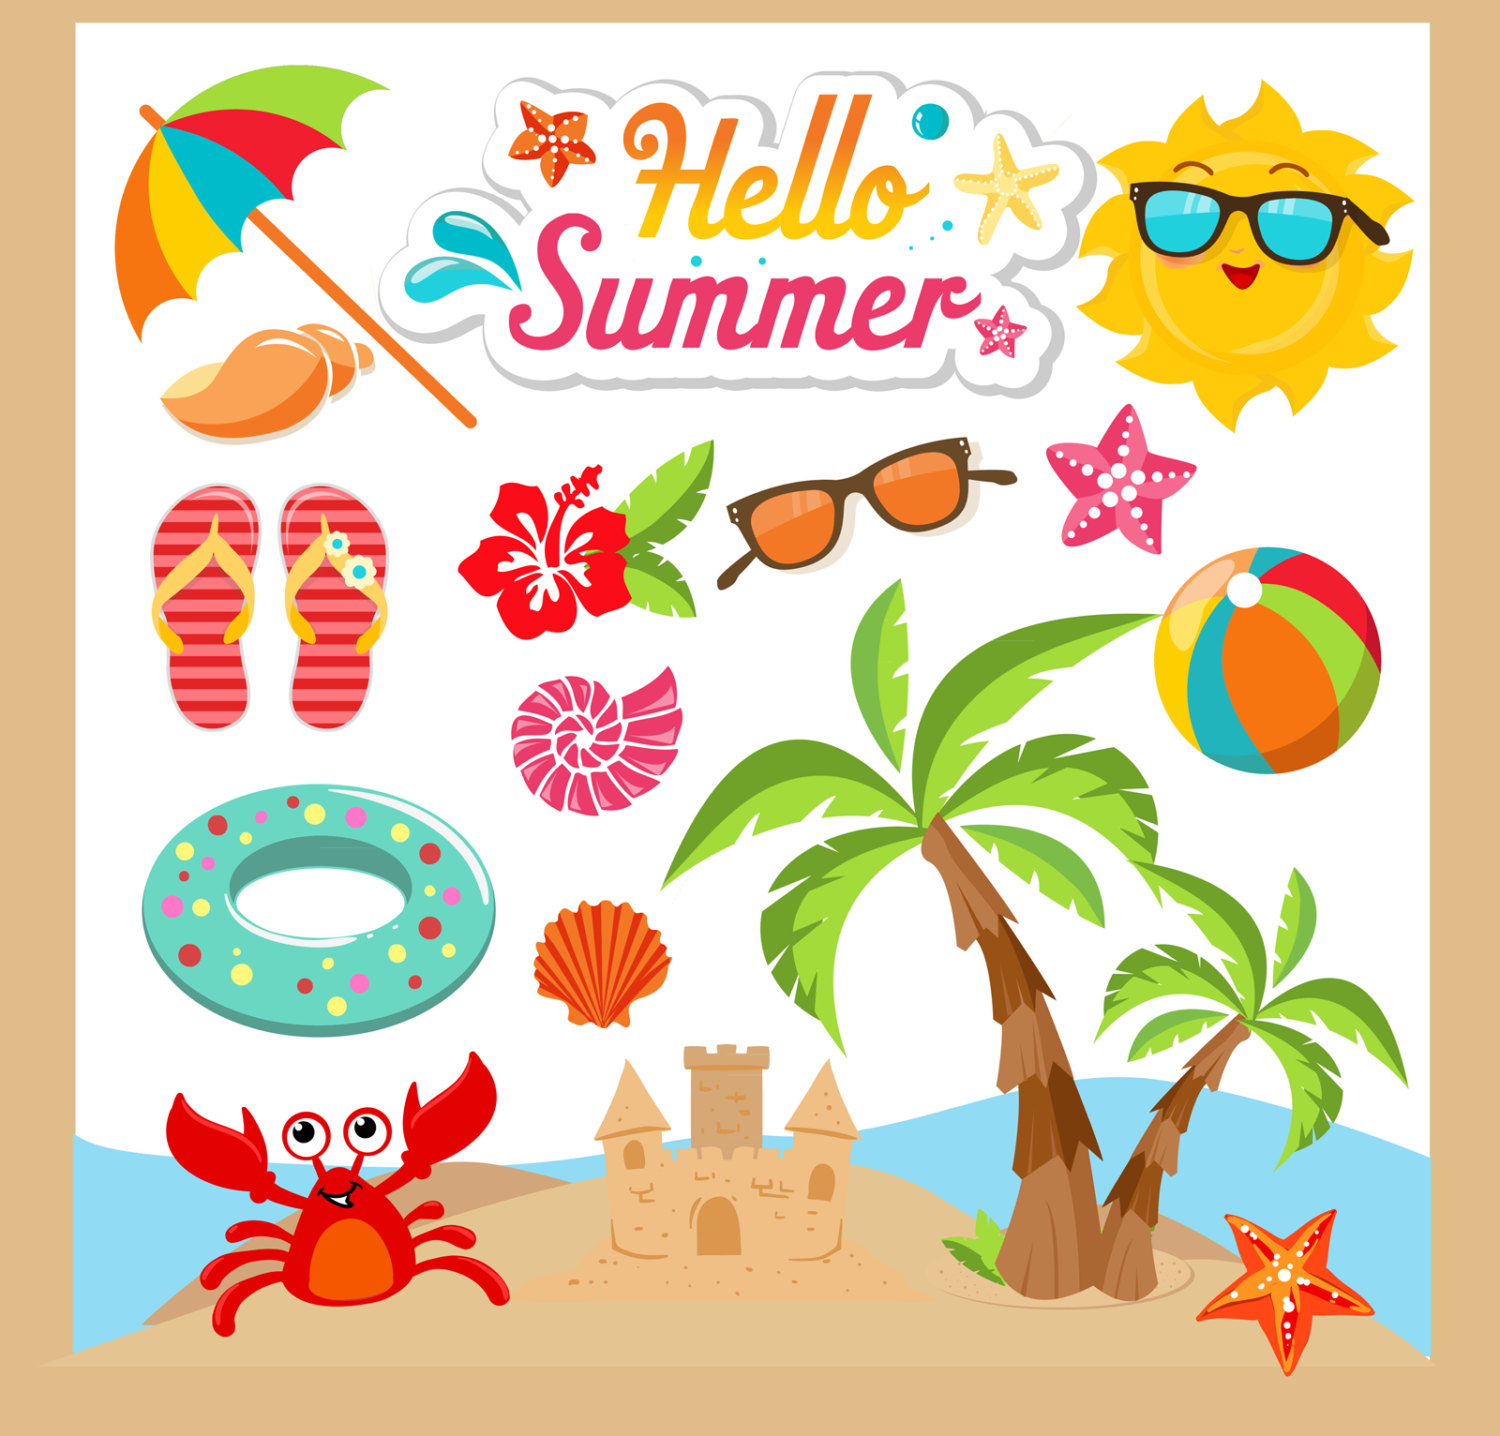 Summer Clipart, Summer Clip Art, Beach Clipart, Beach Clip Art, Summer, Vacation Clipart - EPS and PNG files included - summer clipart